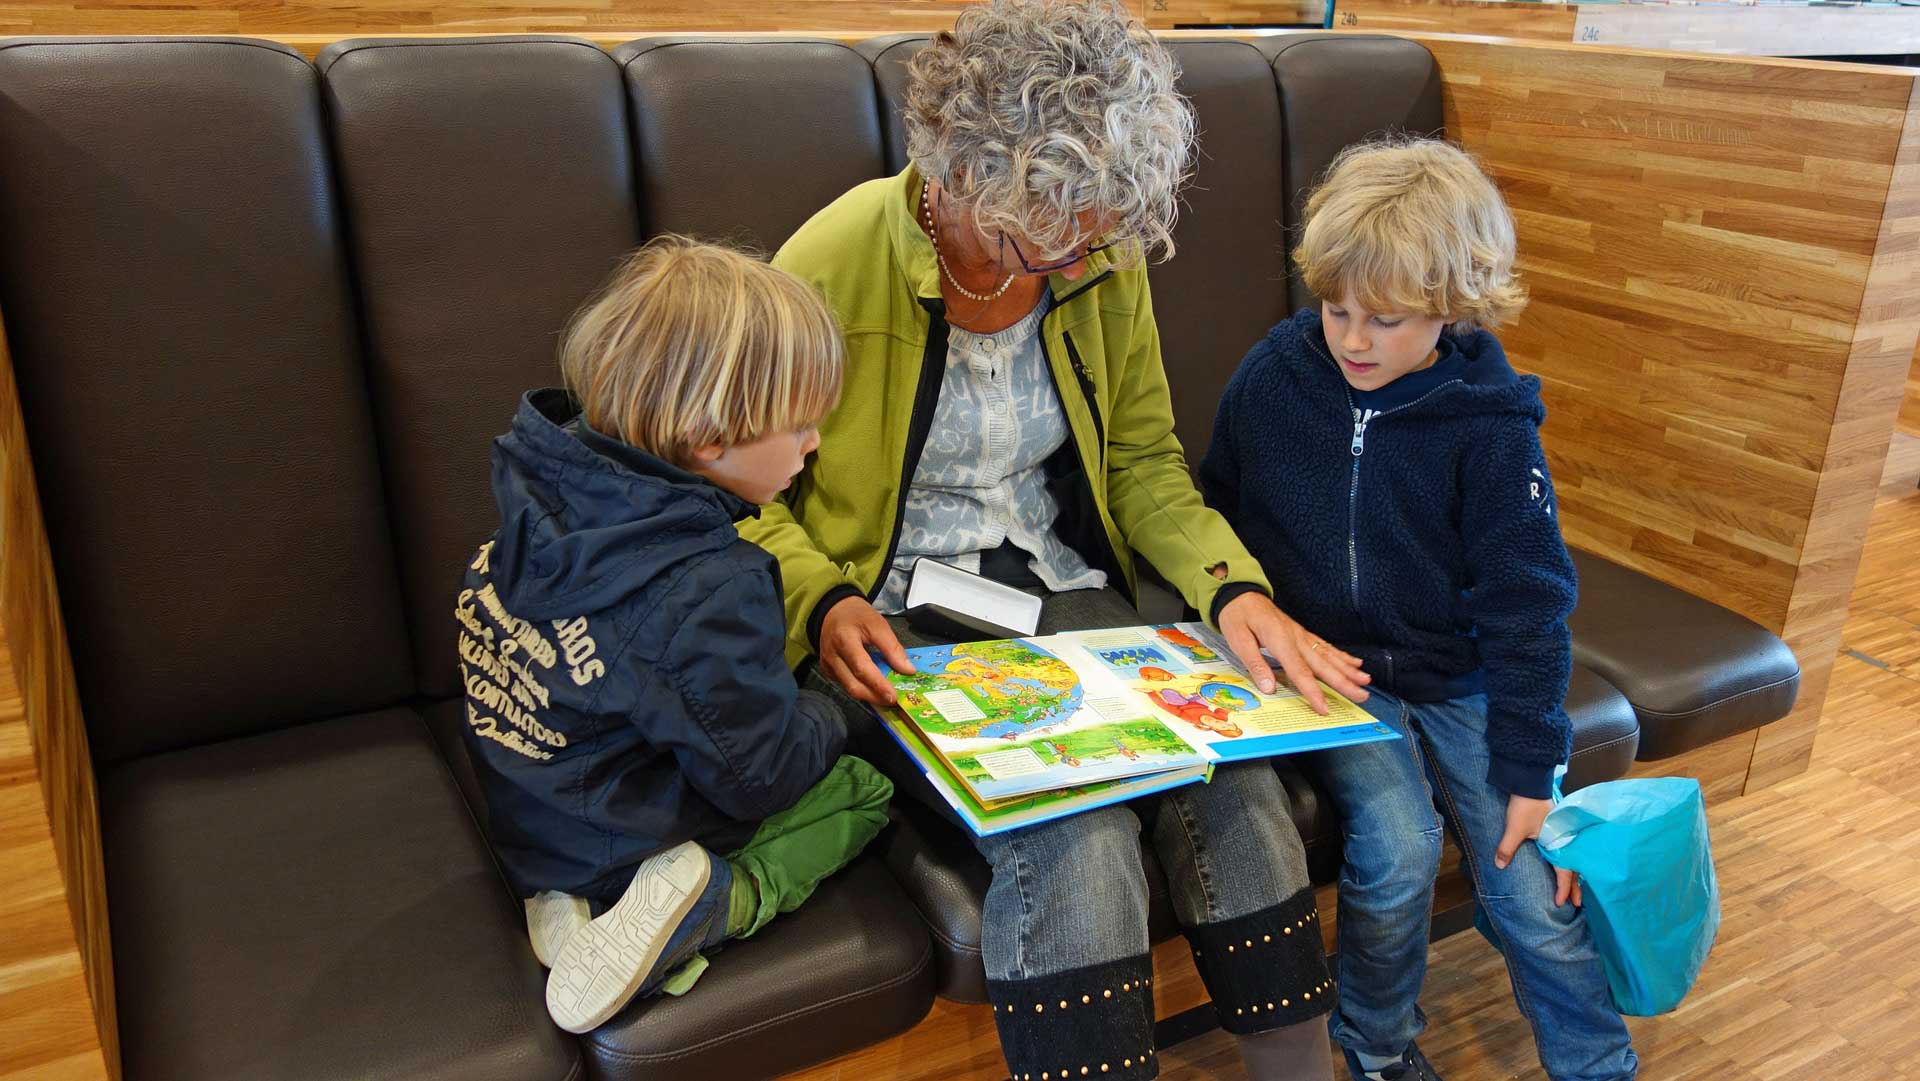 A grandparent reading with grandchildren.